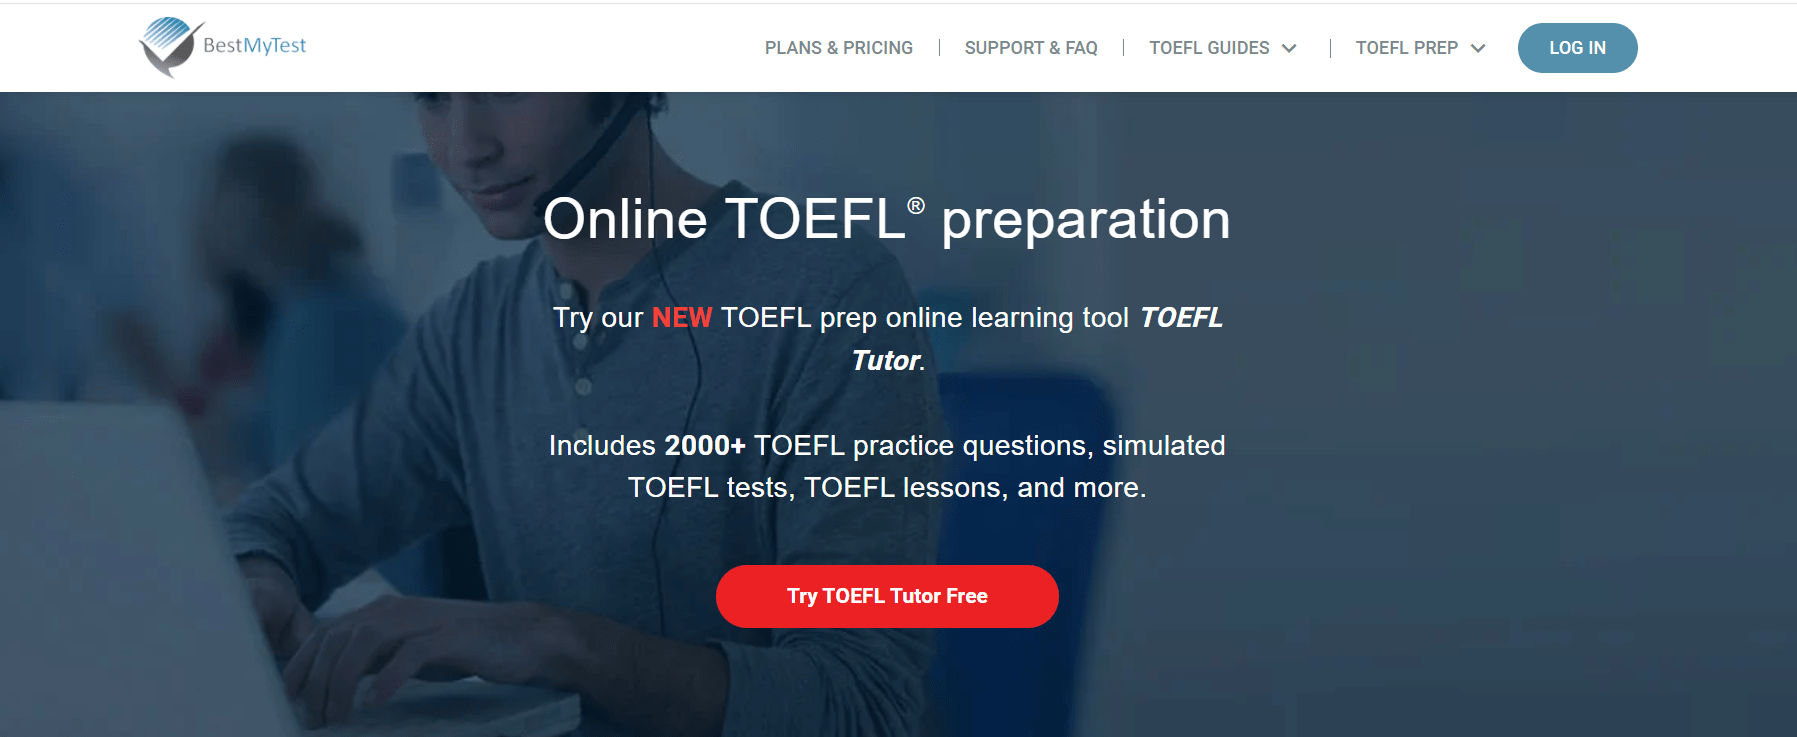 Online TOEFL preparation